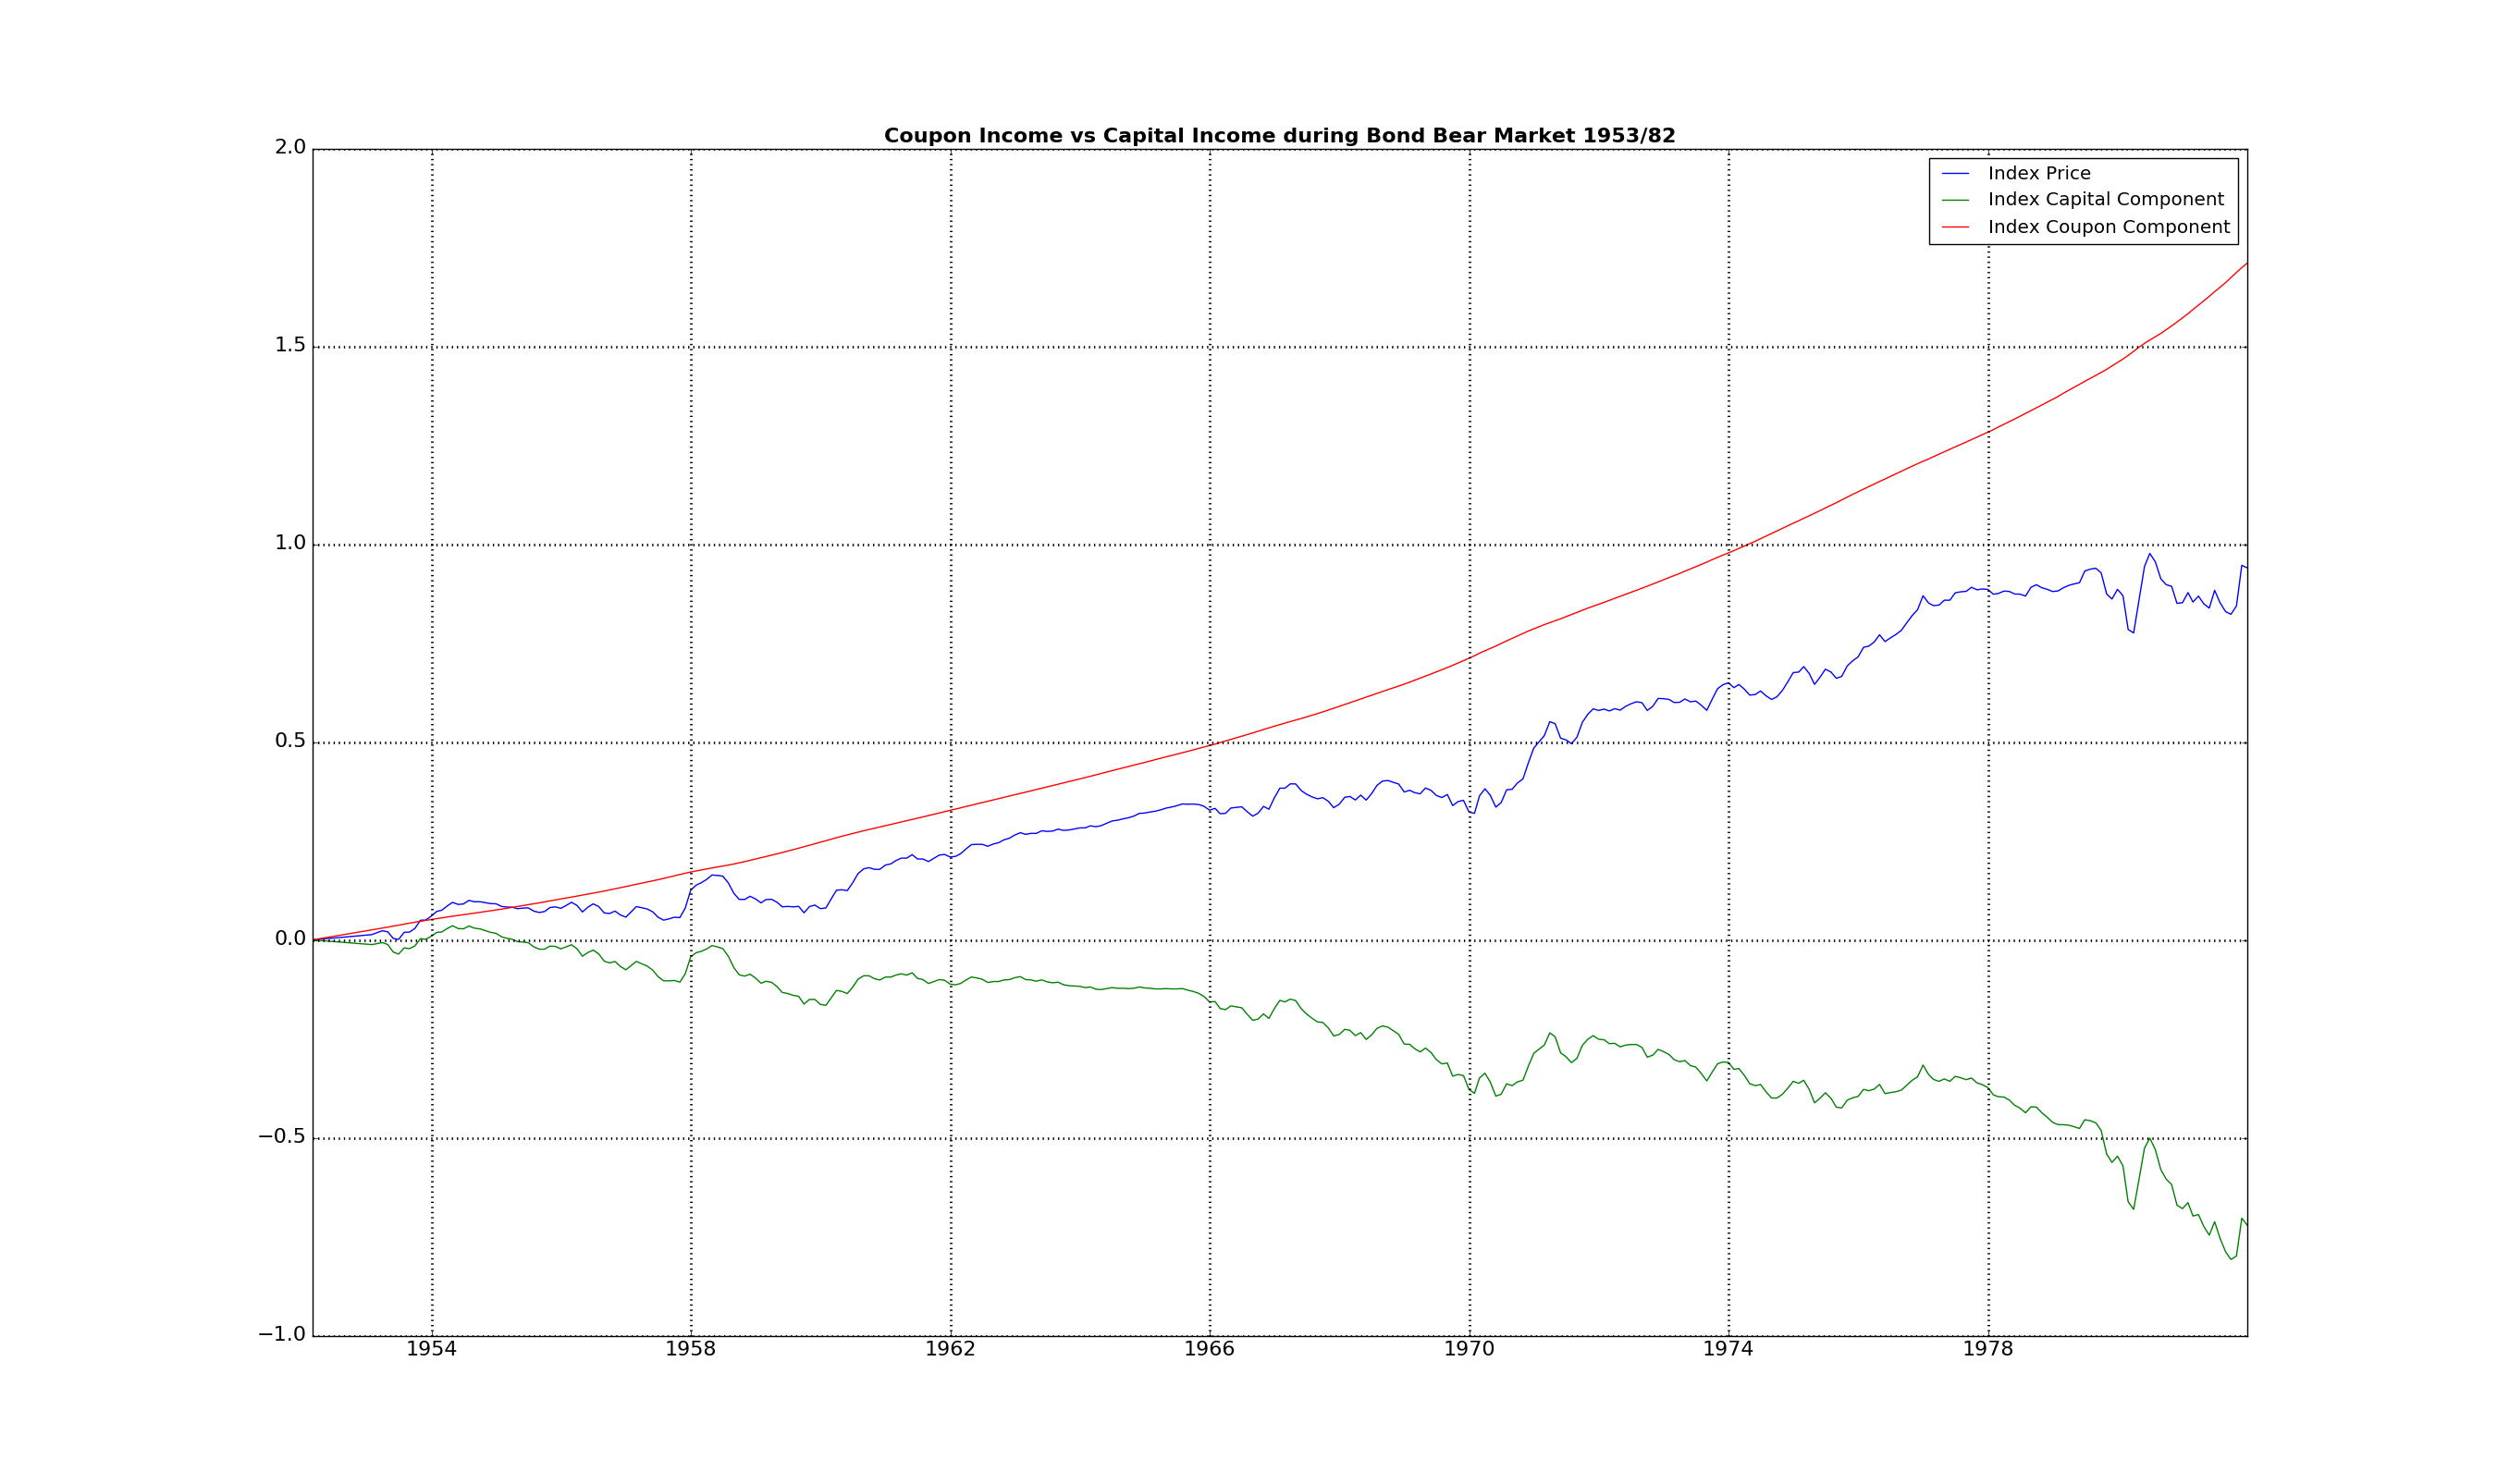 Coupon Income vs Capital Income during Bond Bear Market 1953/82